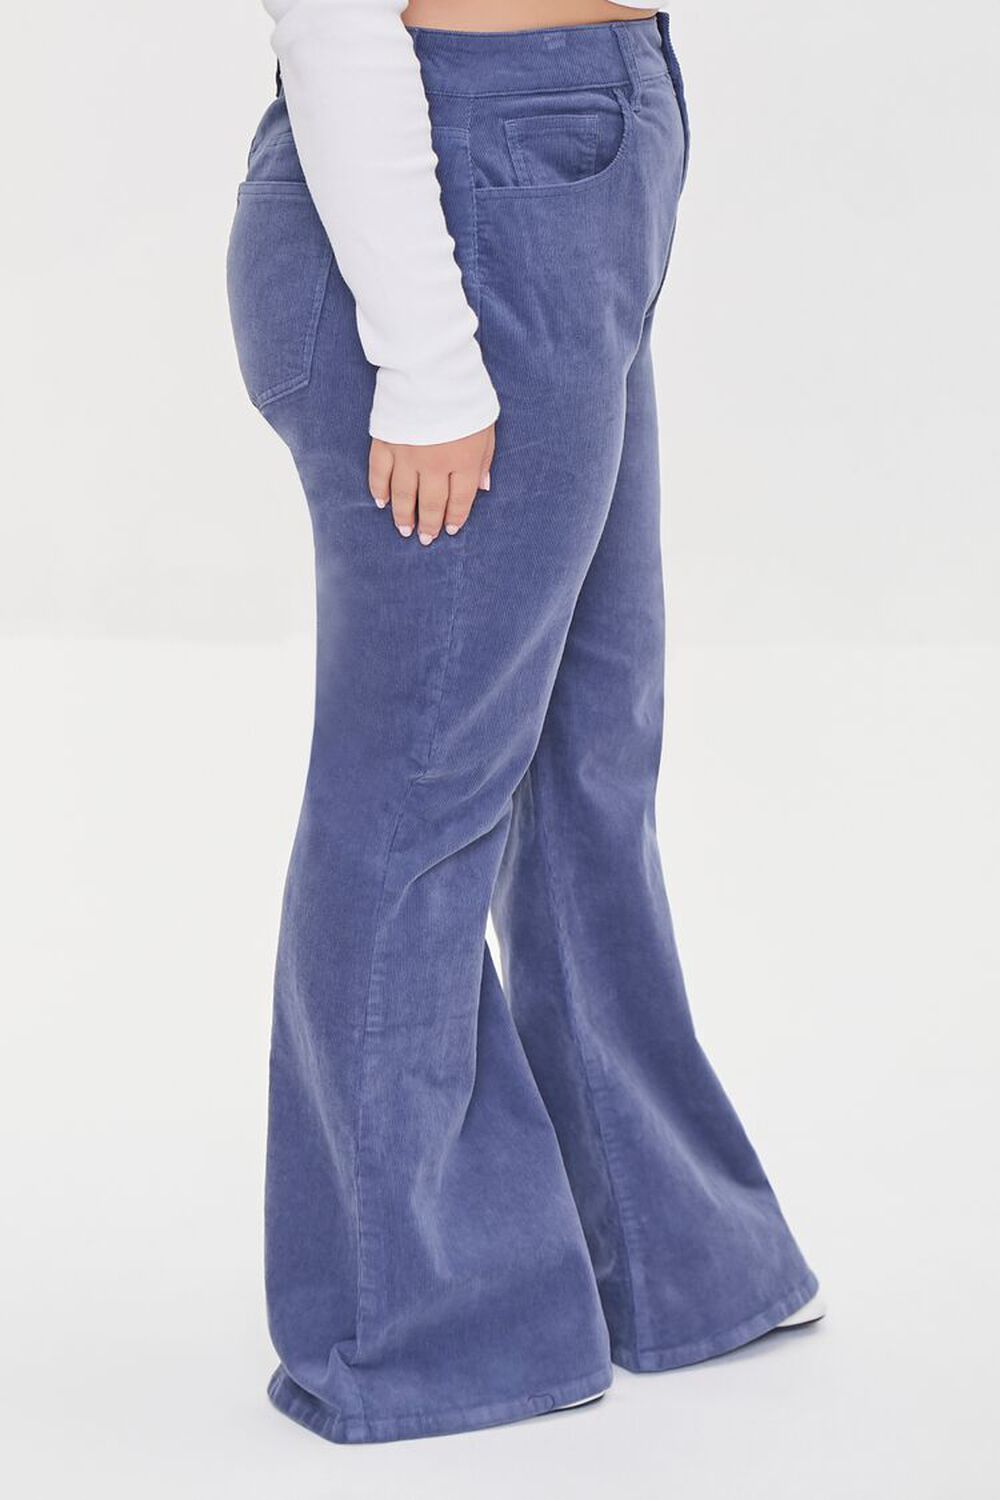 Corduroy Pants - Flare Pants - Navy Blue Pants - $78.00 - Lulus